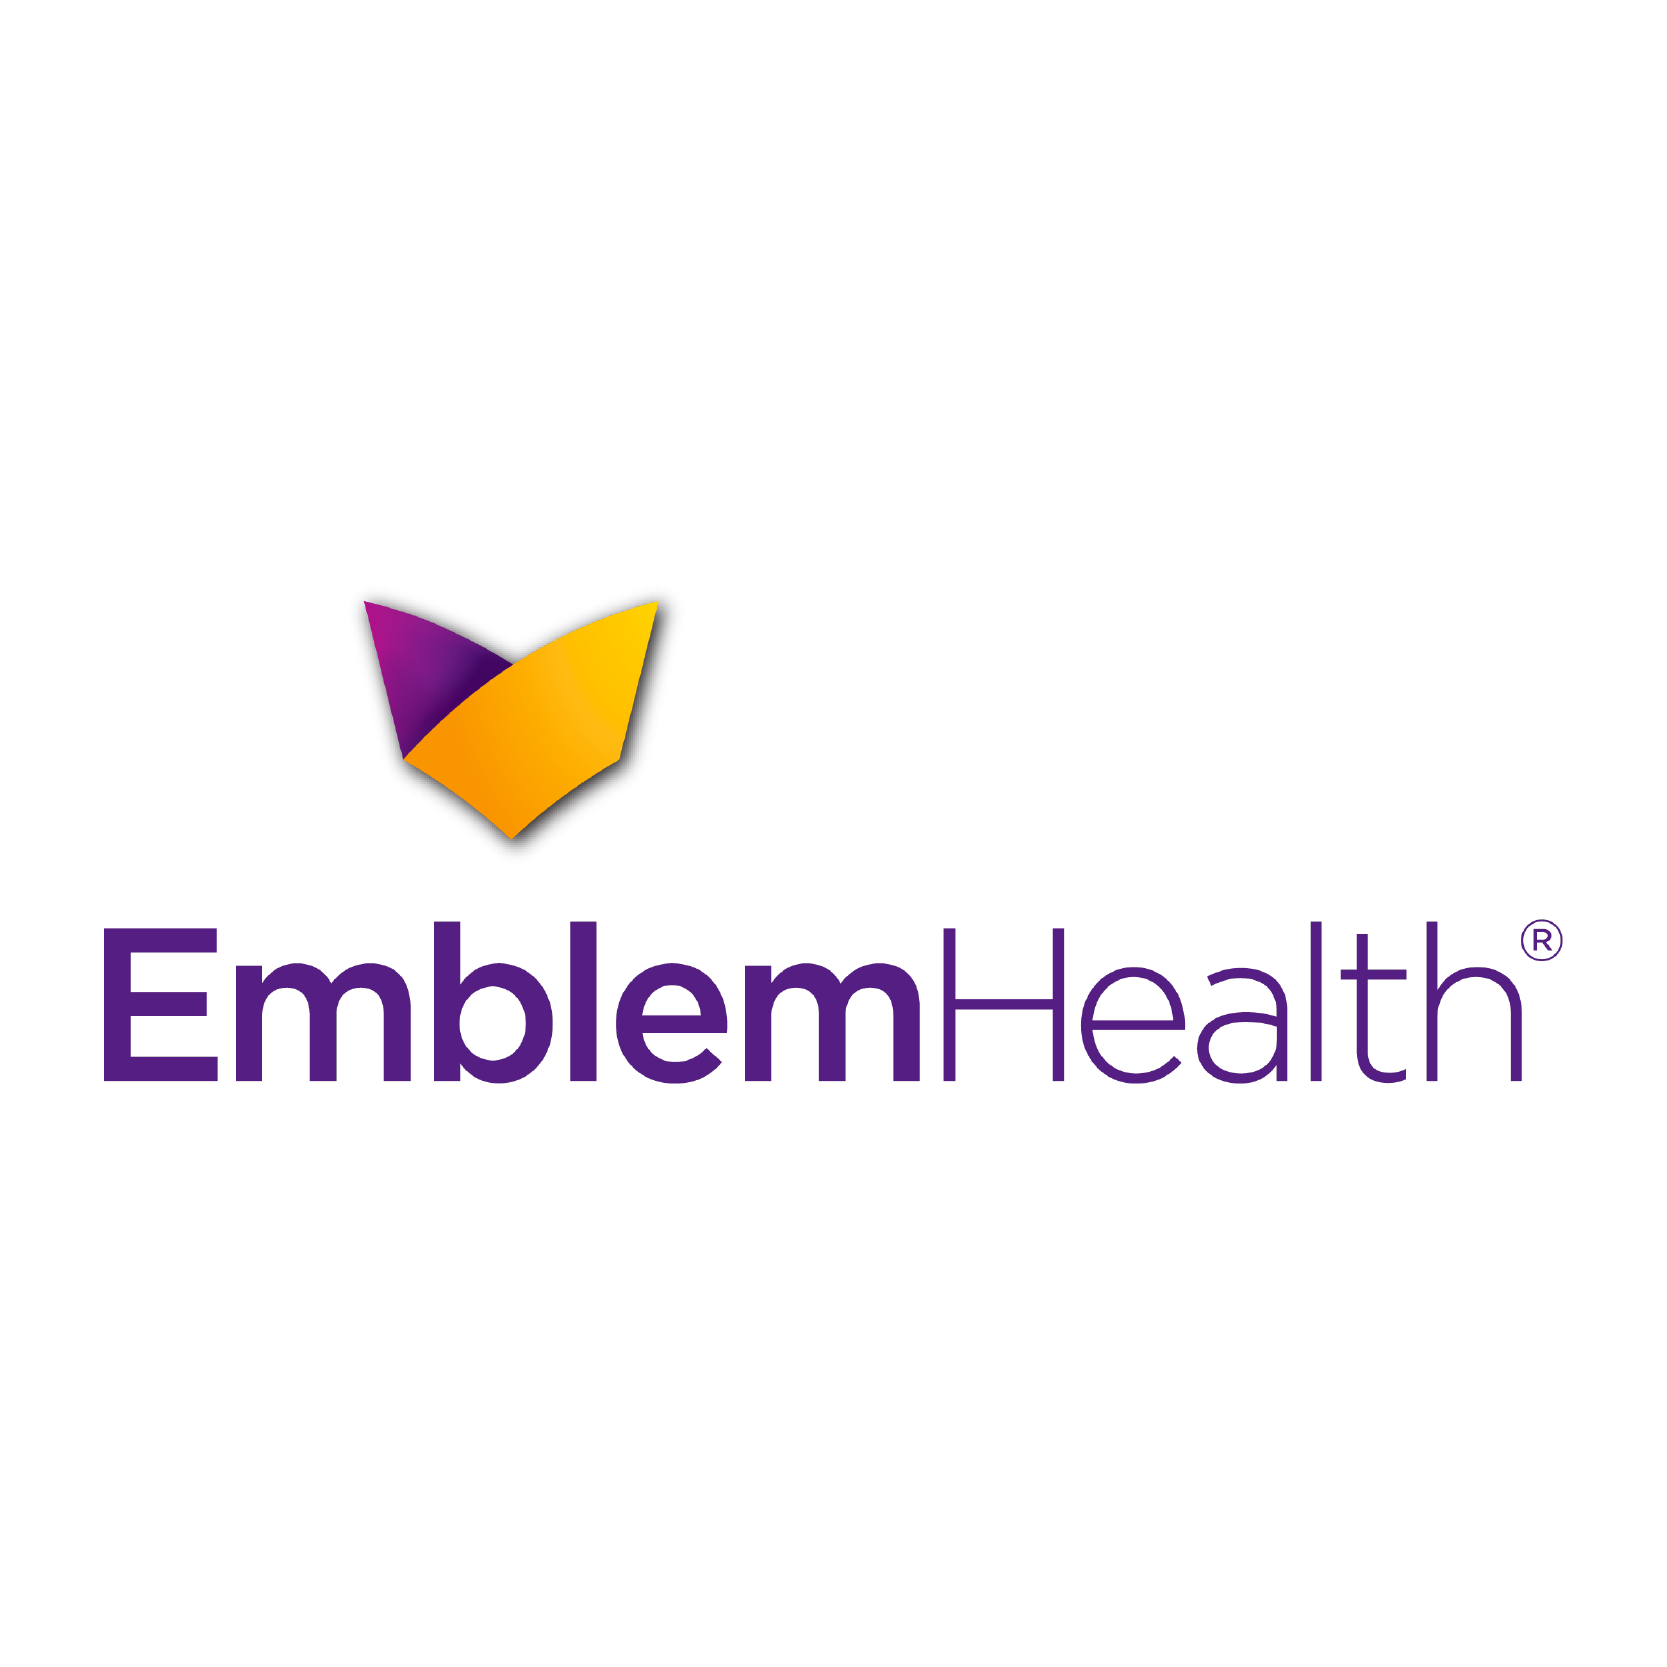 Emblemhealth incbu ine week conduent aoftware trainer